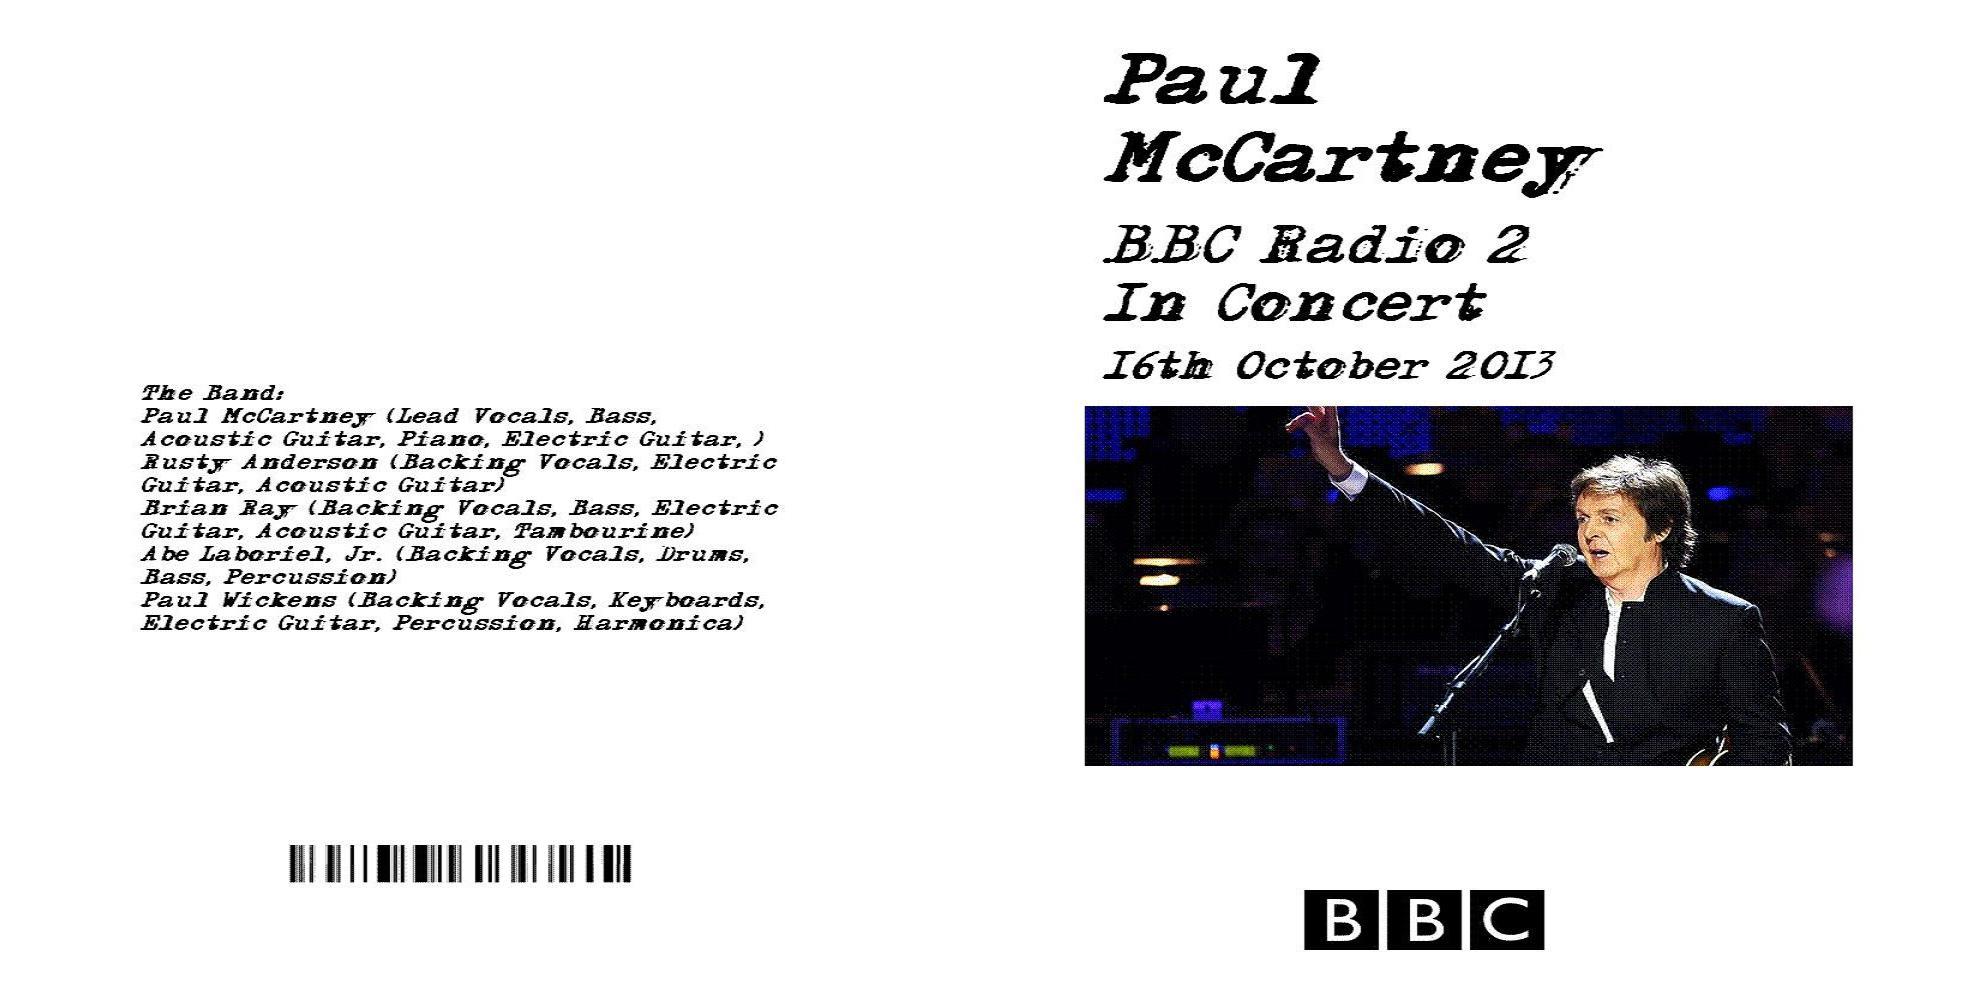 PaulMcCartney2013-10-16BBCRadio2InConcert (1).jpg